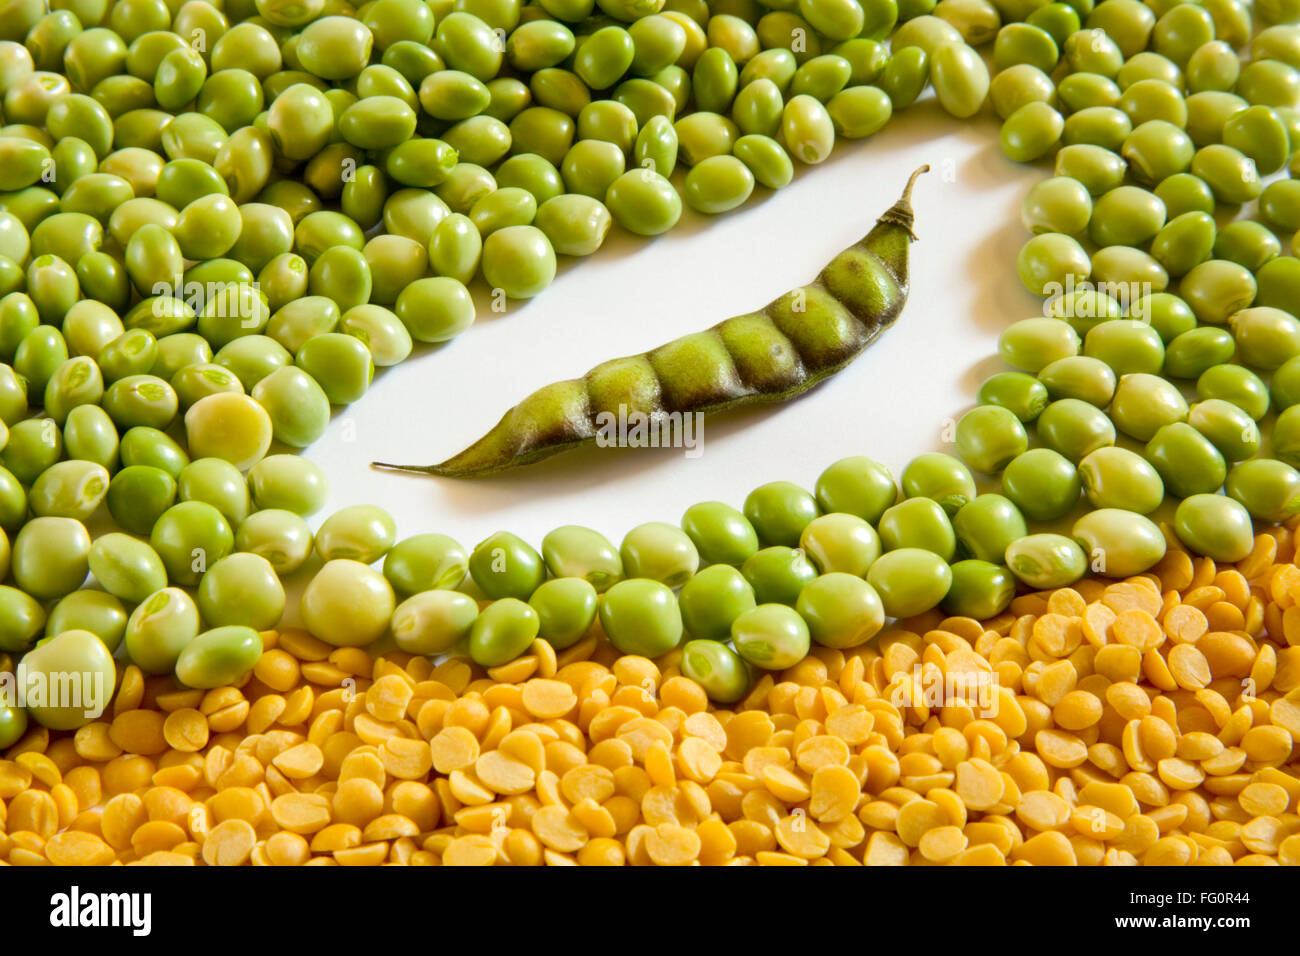 Grain , fresh green and yellow split lentils toor arhar dal lens culinaris with peapod Stock Photo